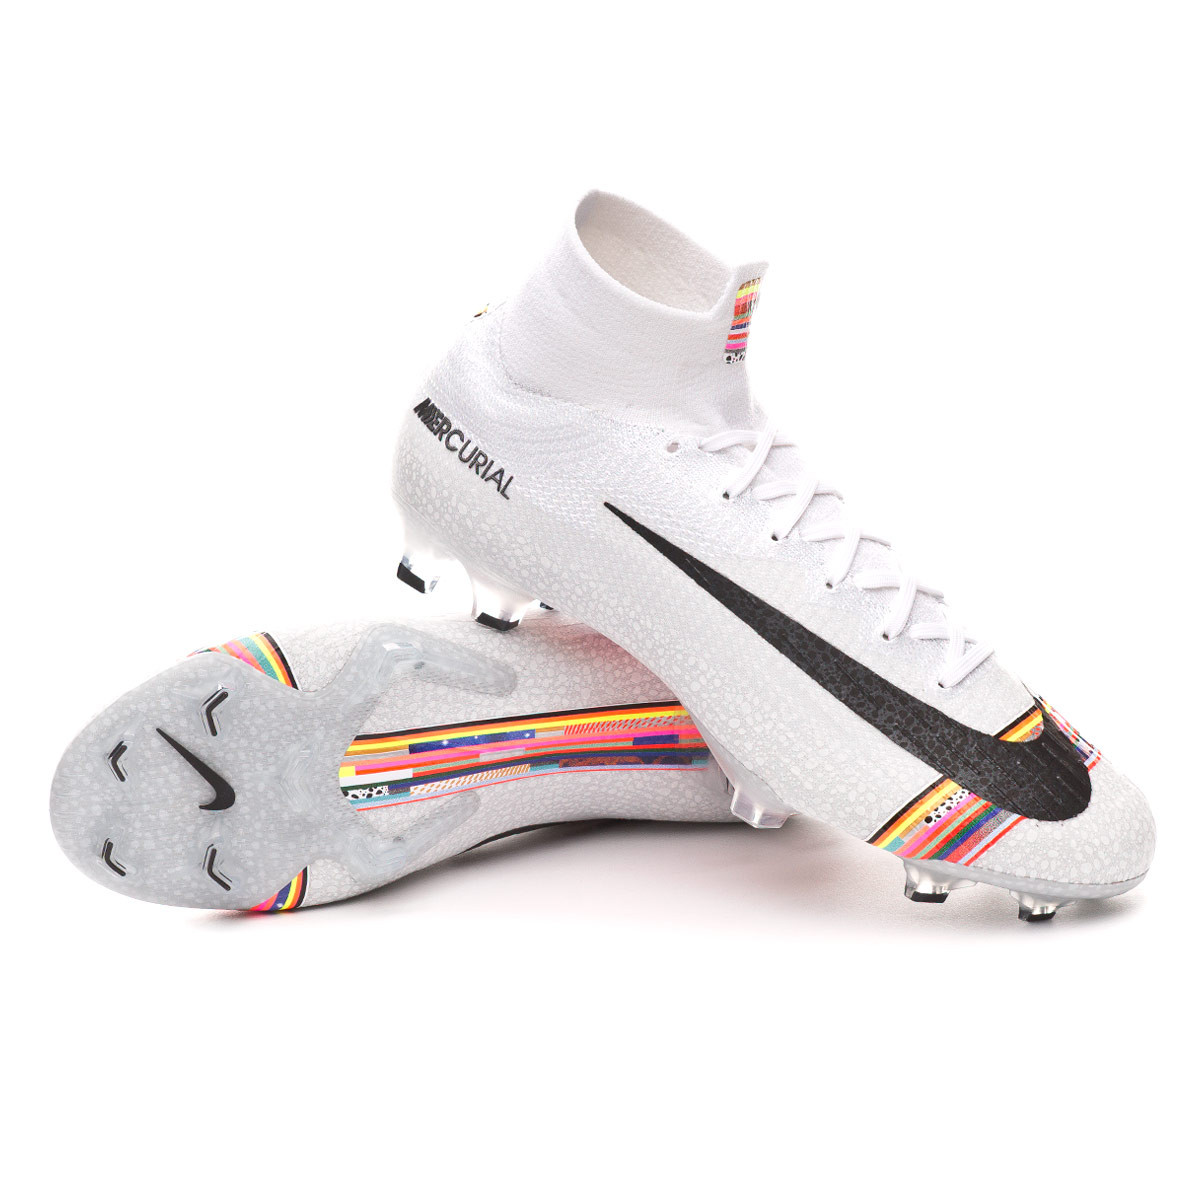 Football Boots Nike Mercurial Superfly VI Elite LVL UP FG Pure  platinum-Black-White - Football store Fútbol Emotion